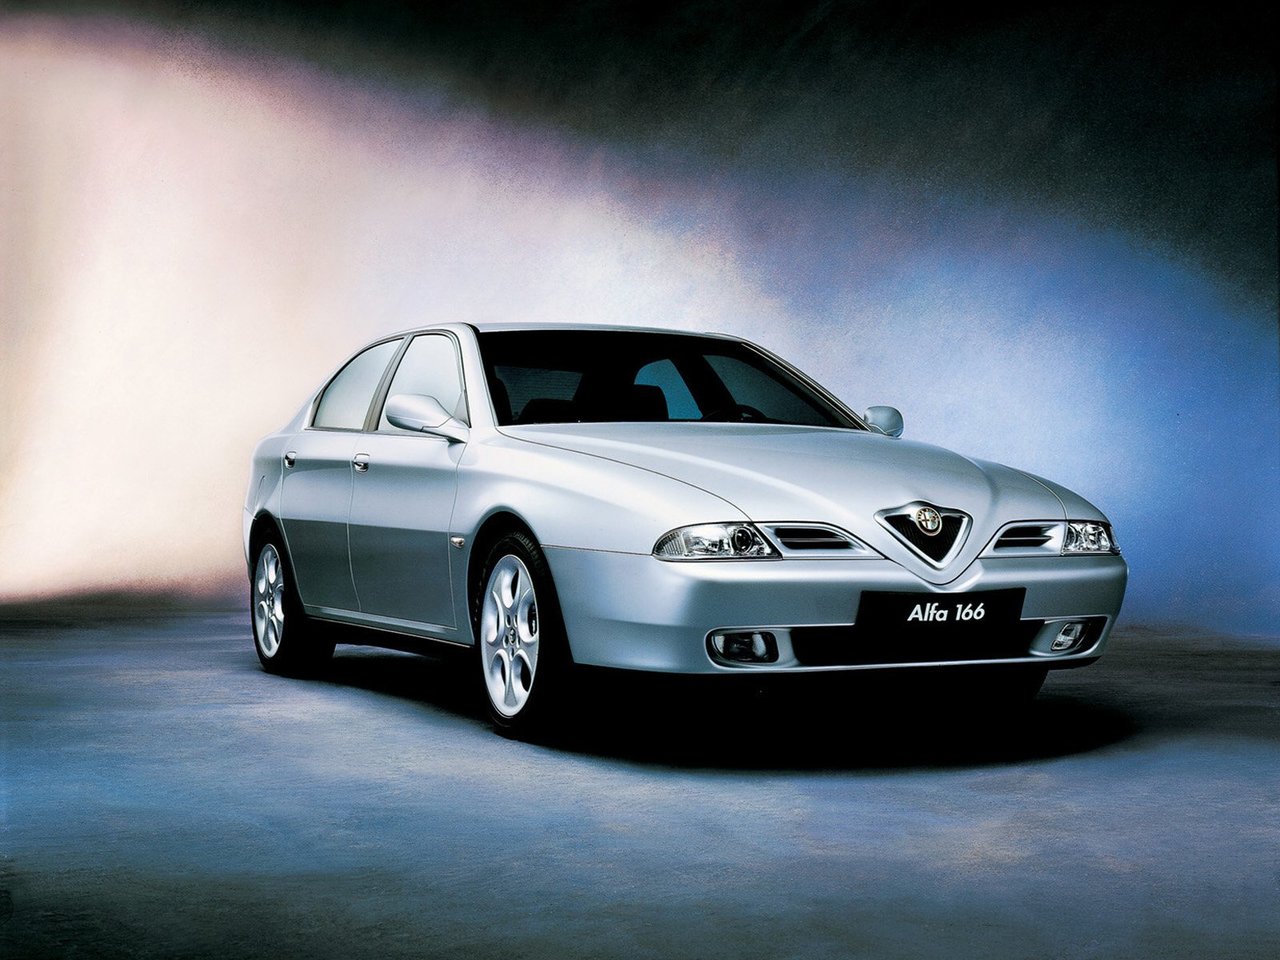 Расход газа пяти комплектаций седана Alfa Romeo 166. Разница стоимости заправки газом и бензином. Автономный пробег до и после установки ГБО.